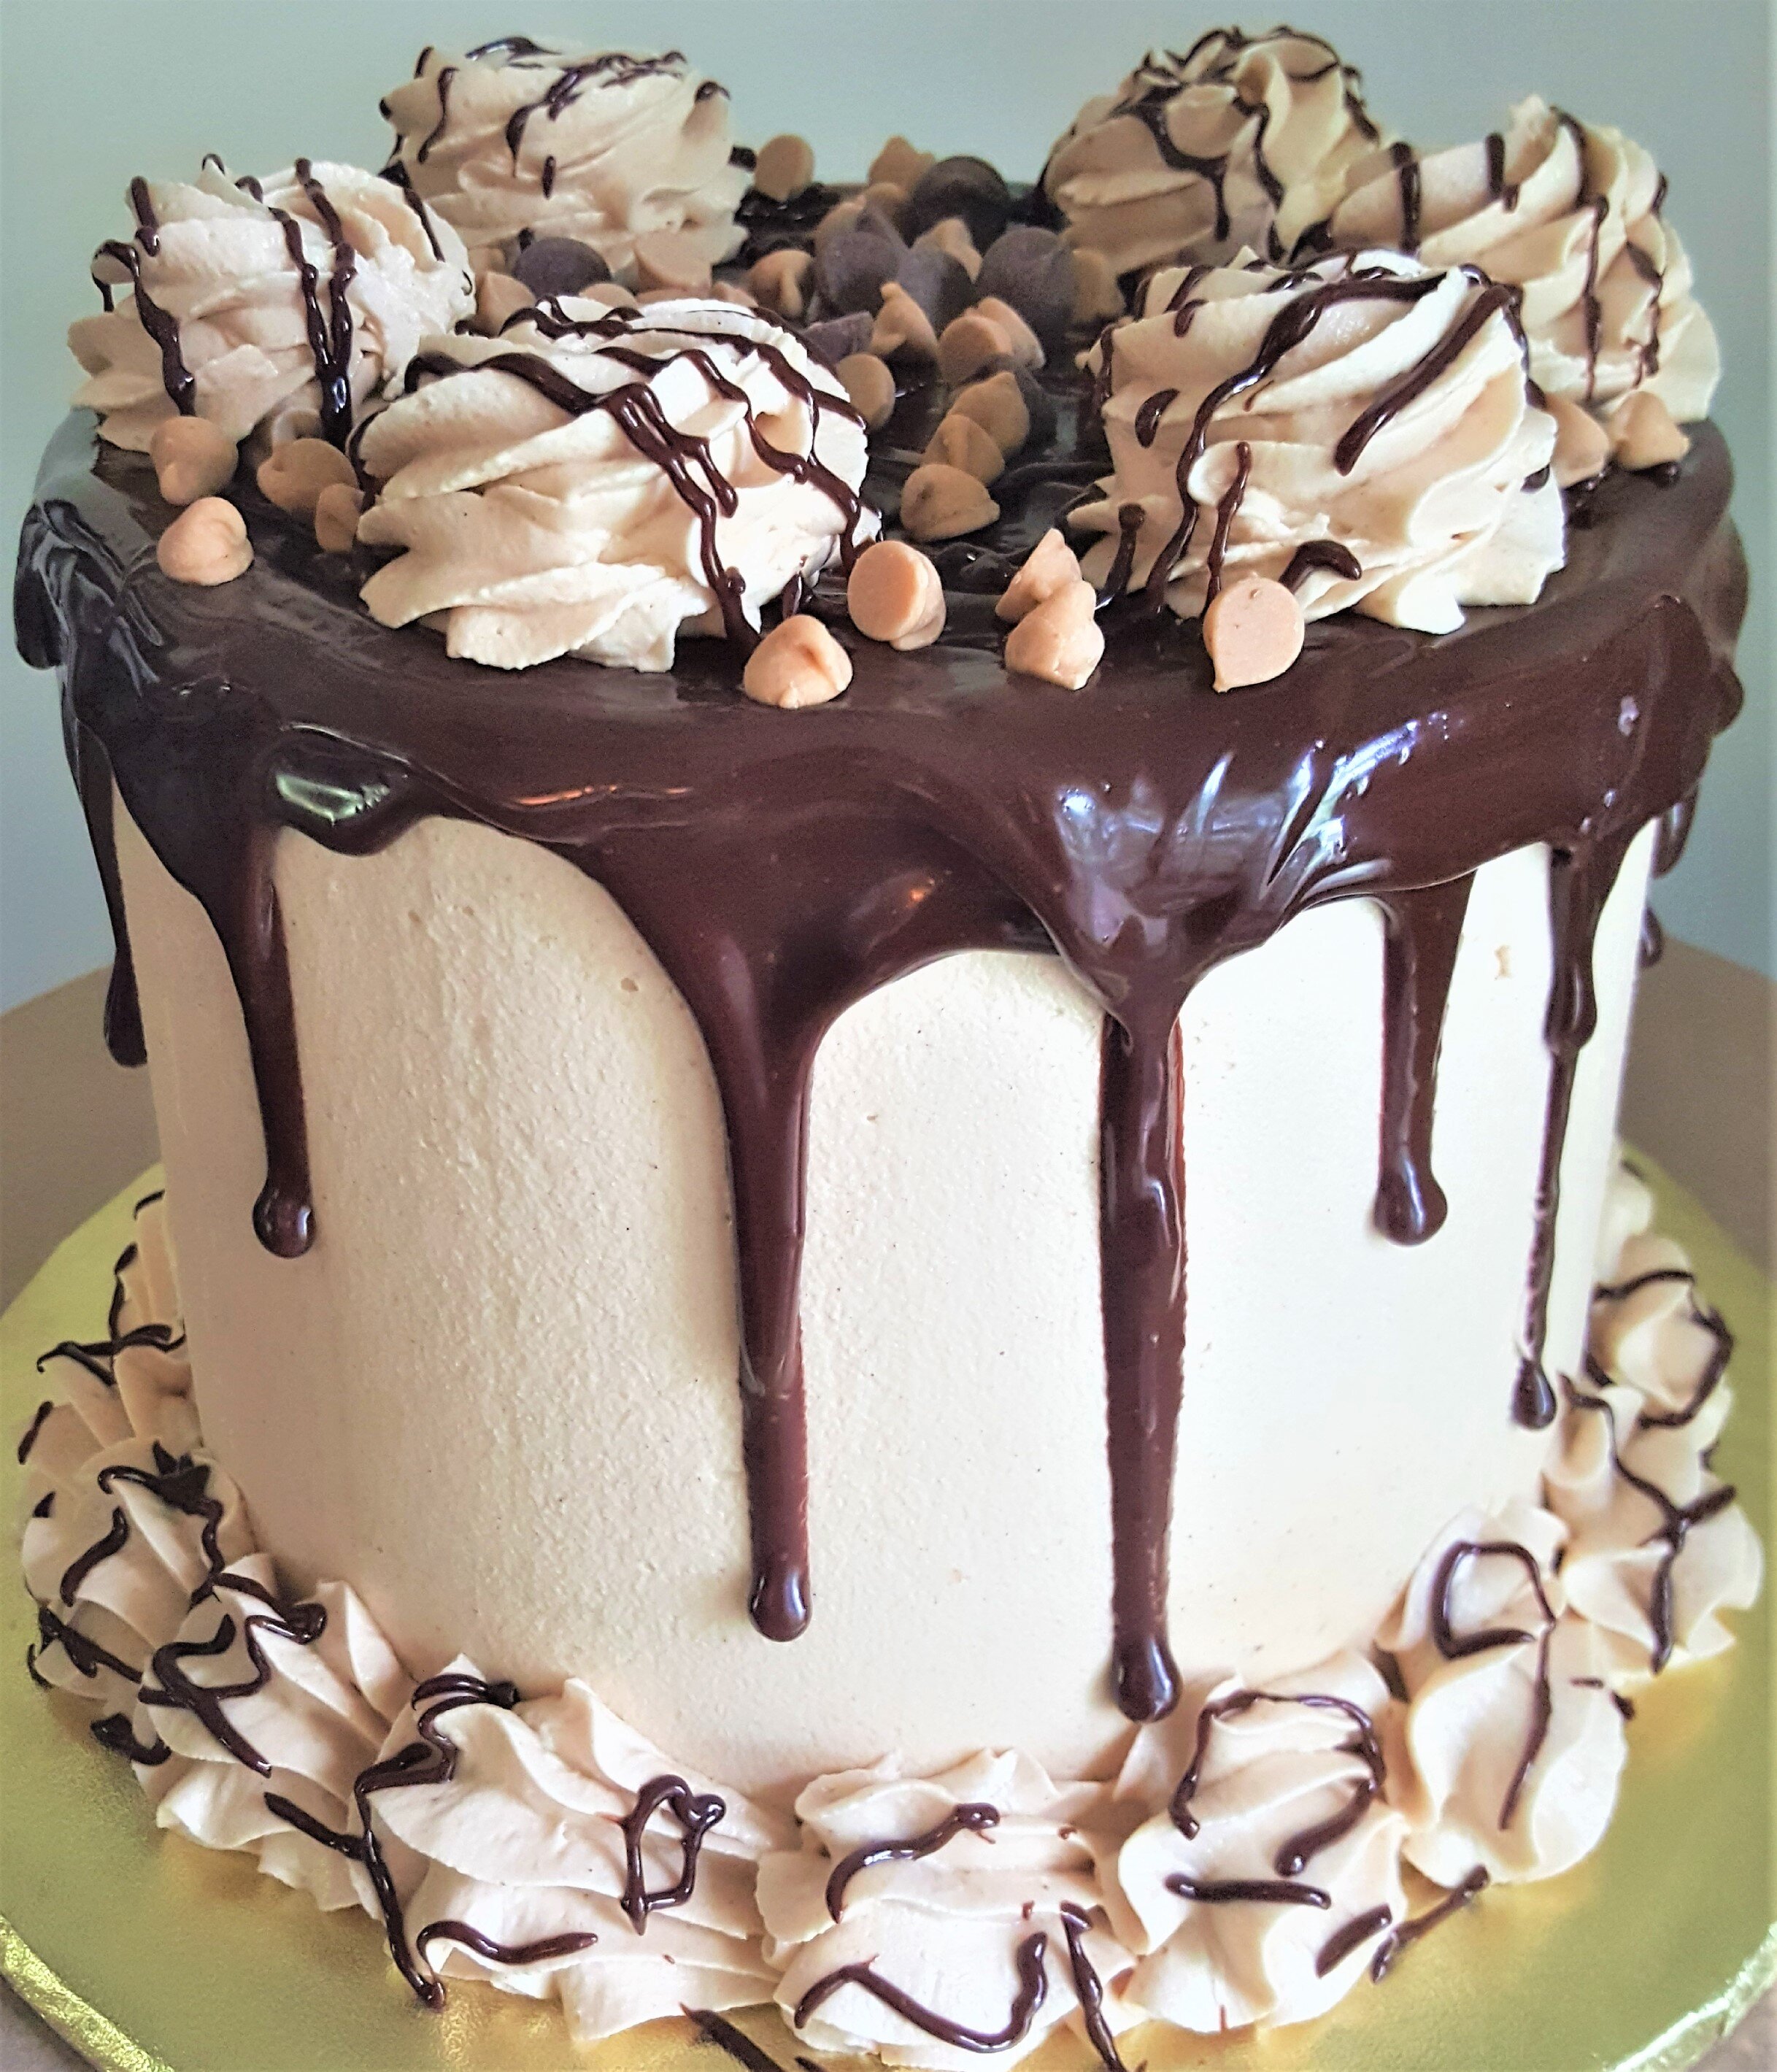 Chicago_Bakery-Cake-Peanut_Butter_Chocolate.jpg